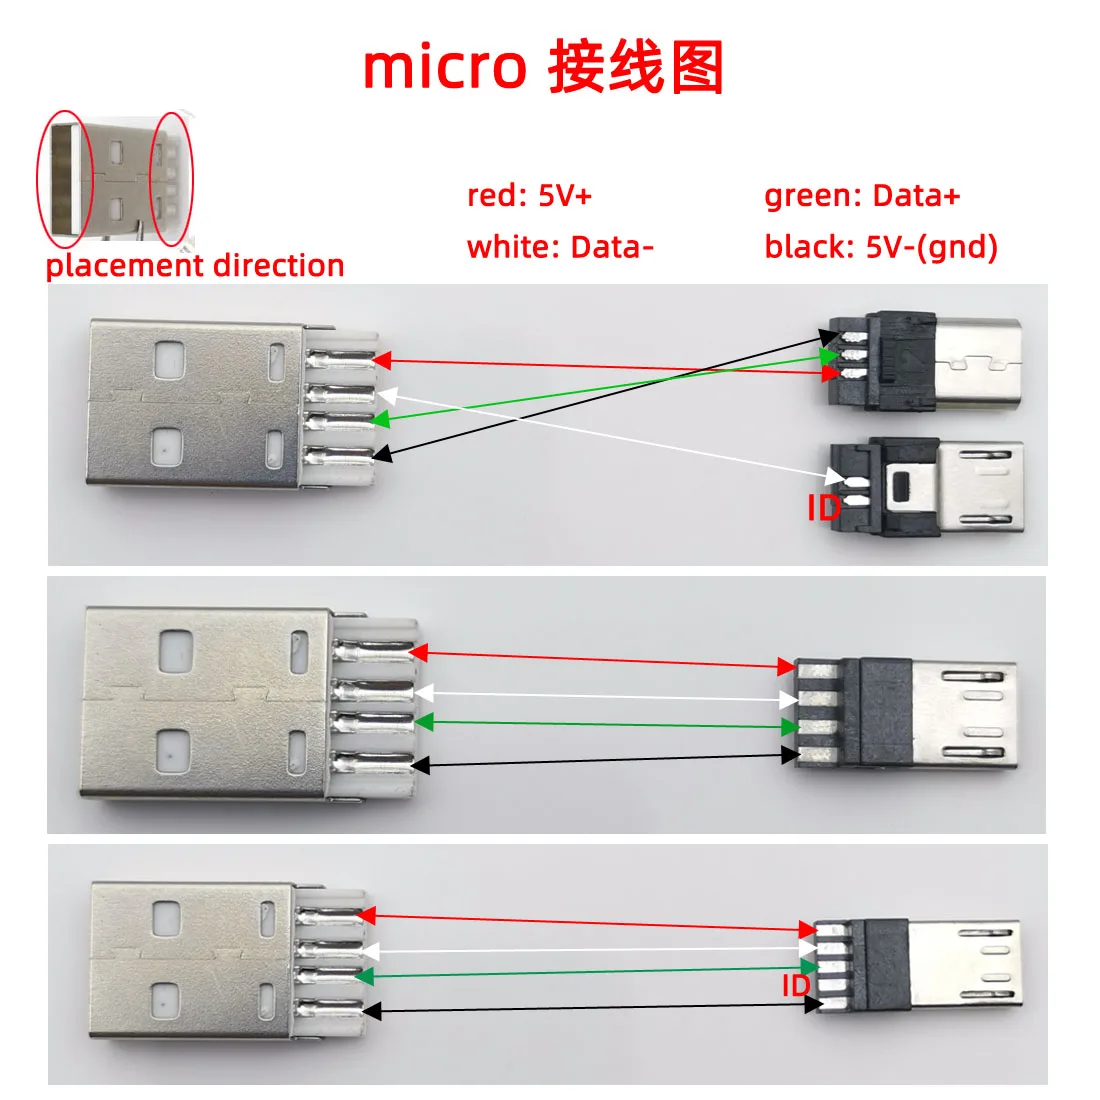 Питание usb mini. Распиновка USB - Micro USB 5 Pin. Micro USB 5 Pin распайка. Micro USB штекер распиновка 4pin. Micro USB OTG разъем распиновка.